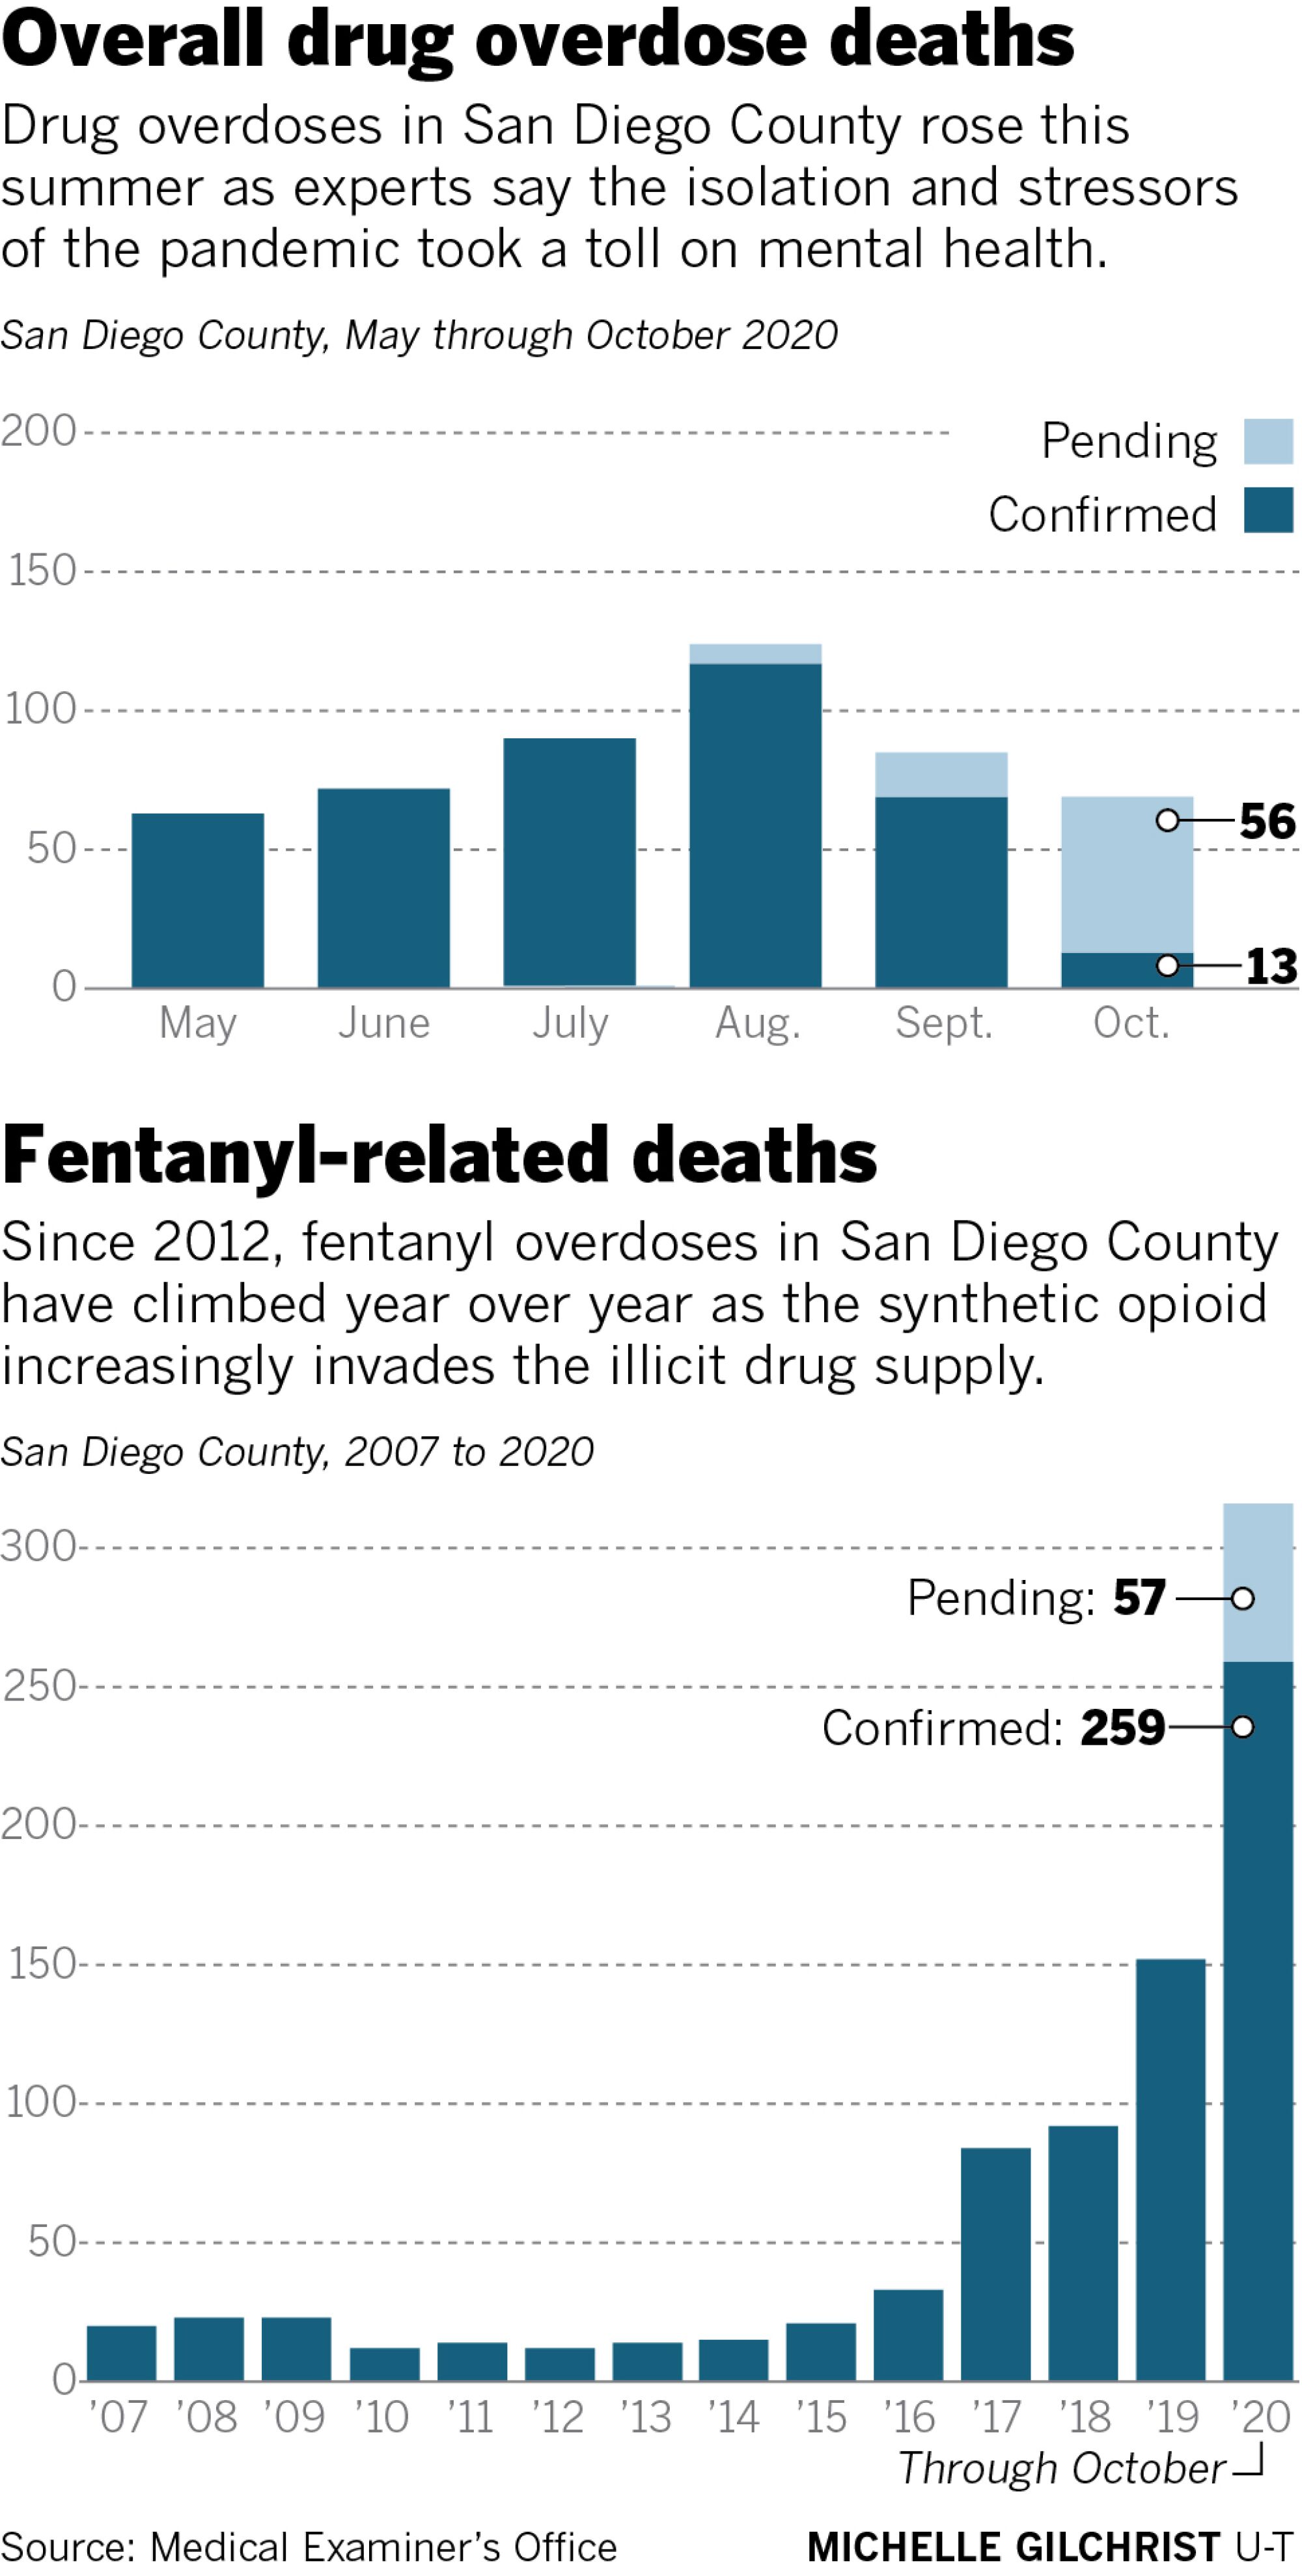 Fentanyl overdose deaths in San Diego County